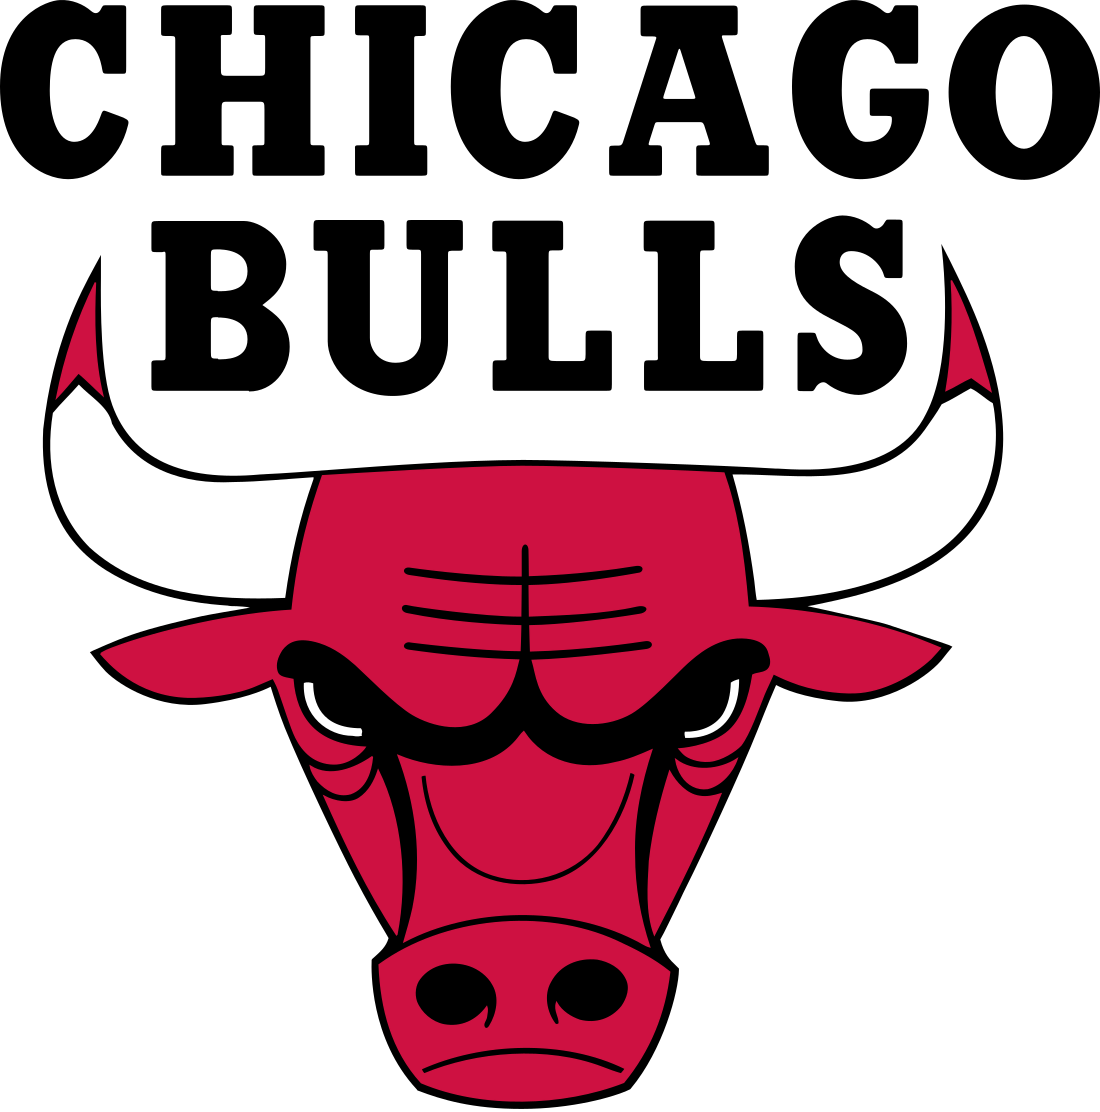 chicago bulls logo 3 - Chicago Bulls Logo